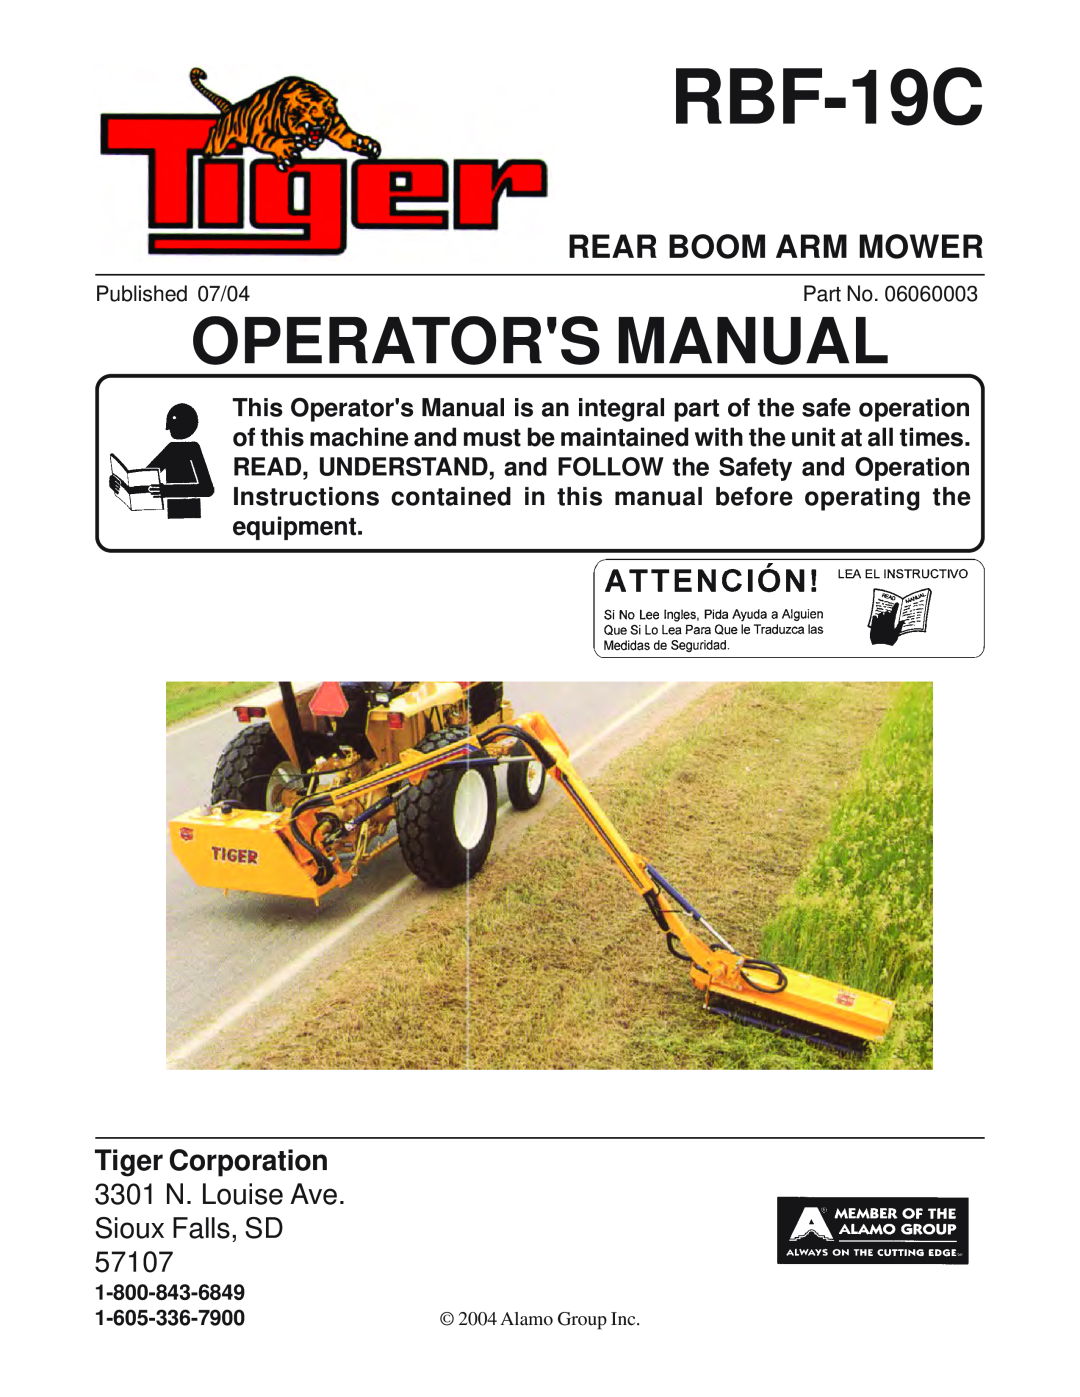 Tiger RBF-19C manual Rear Boom Arm Mower, Operators Manual 